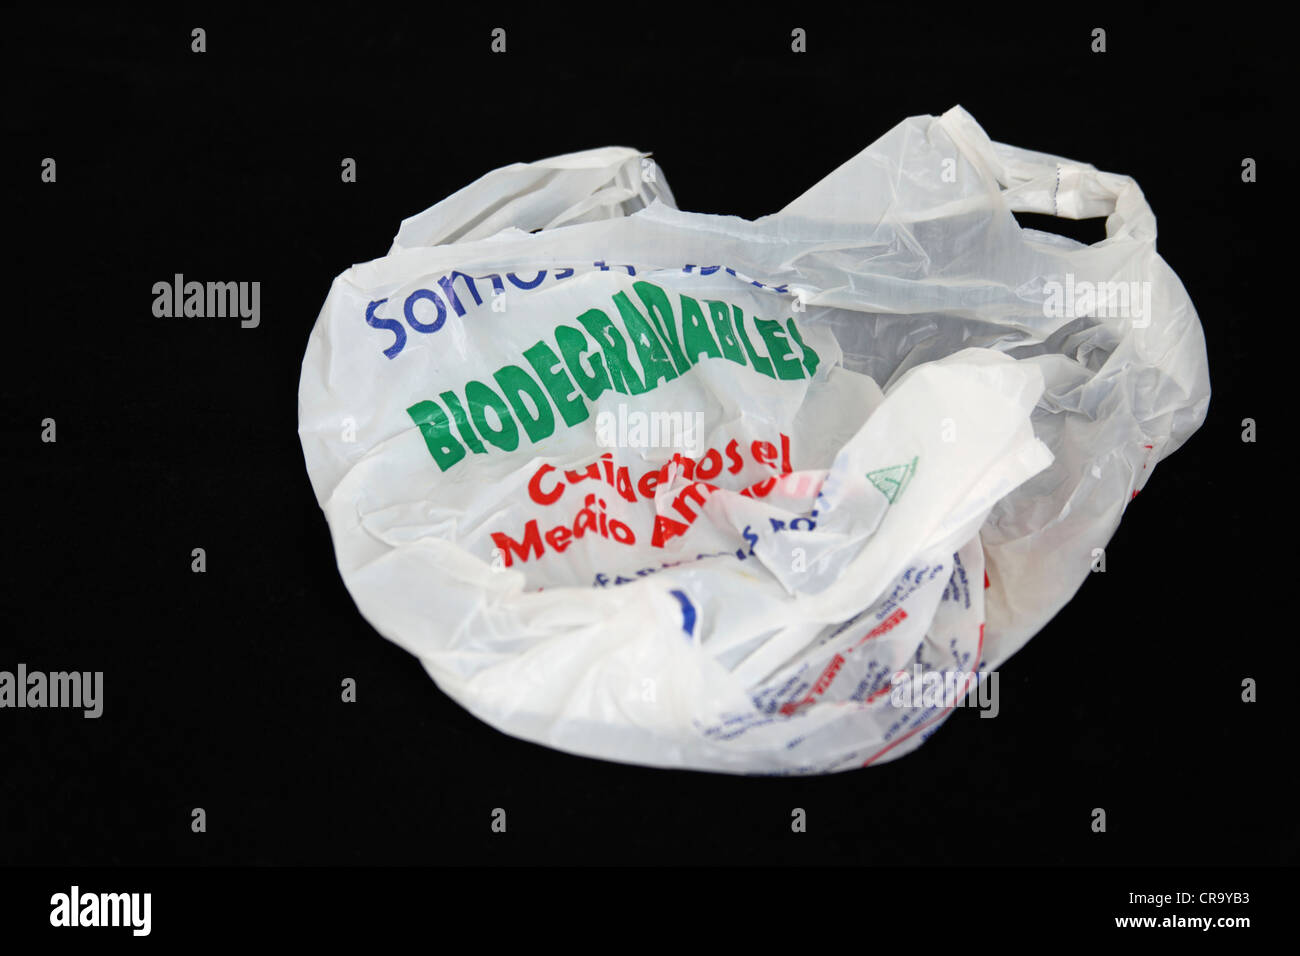 Biodegradable plastic bag provided by Farmacias Bolivia, a Bolivian pharmacy company that owns many chemist shops Stock Photo